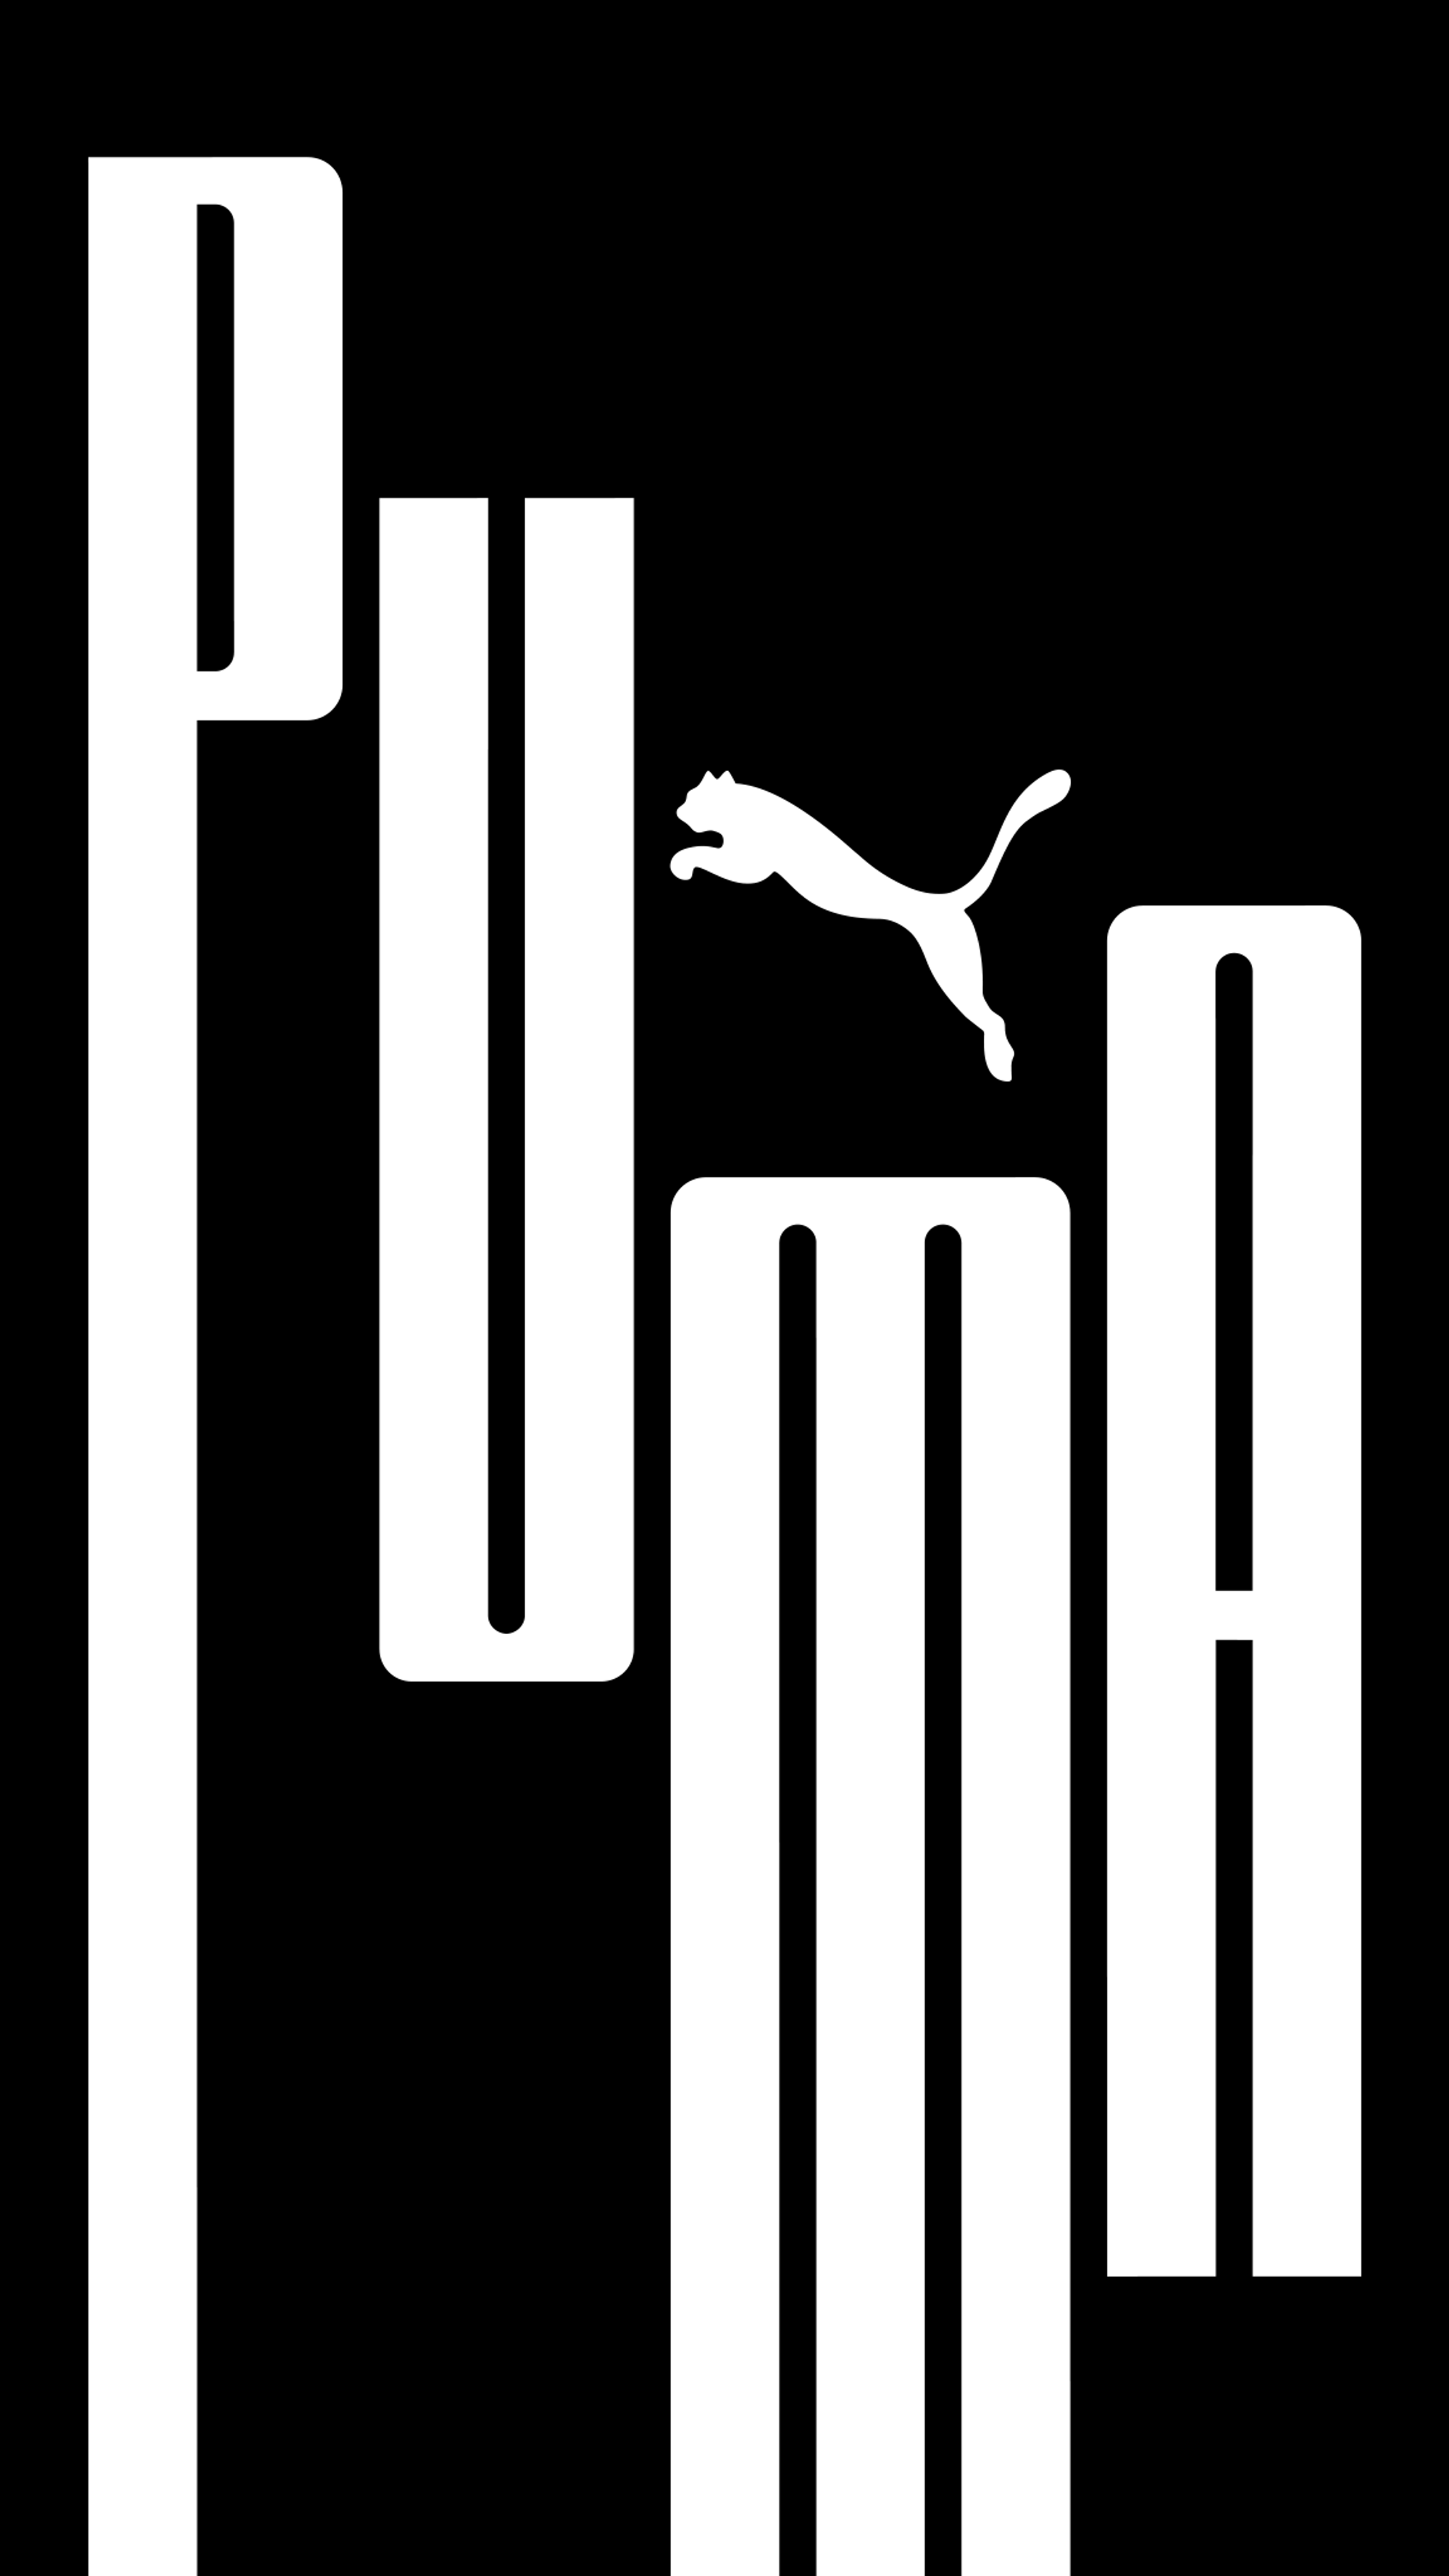 PUMA NYC Store logo stretch